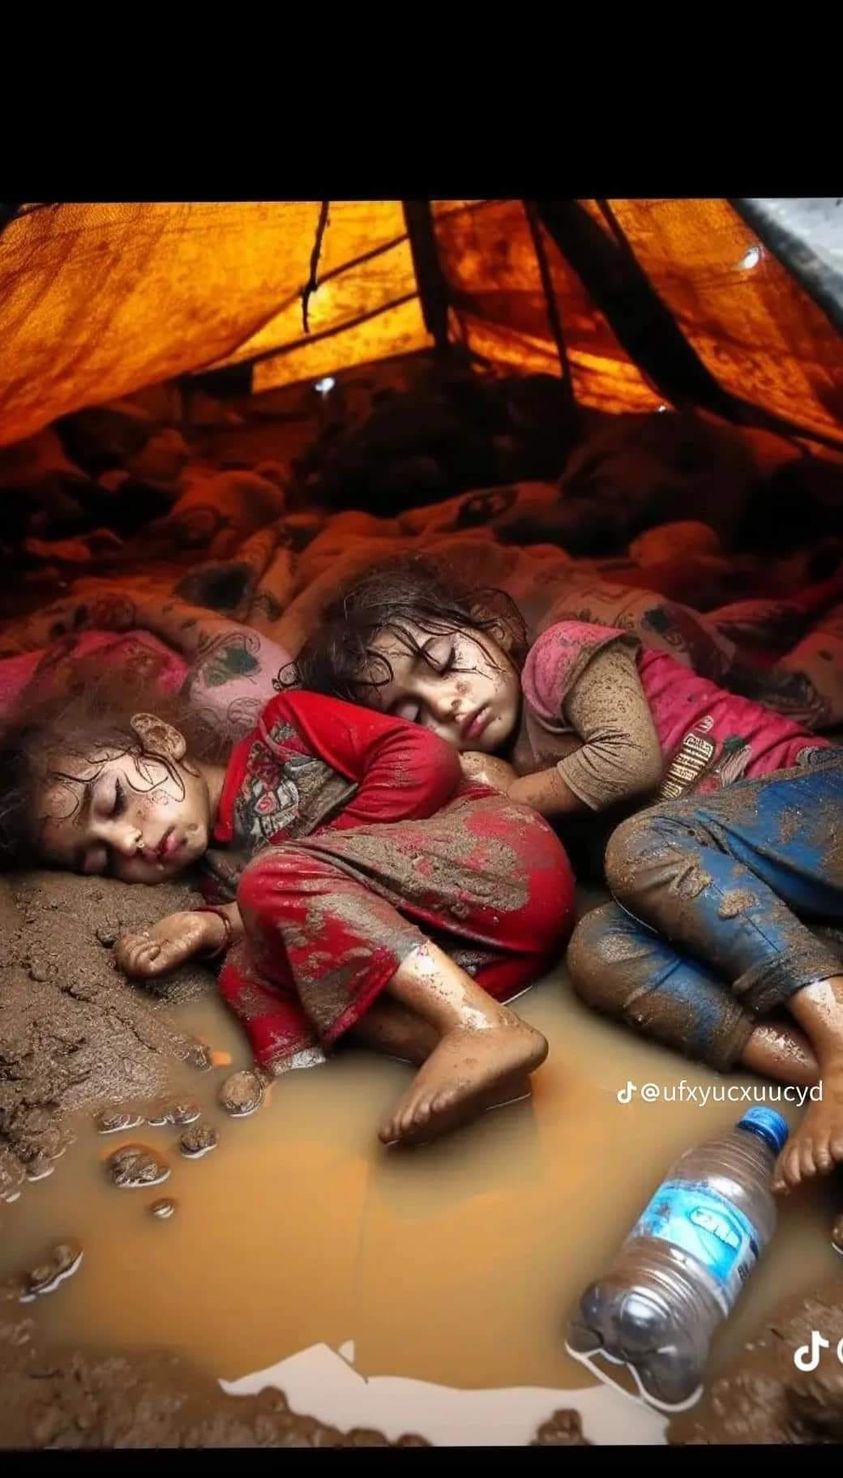 #1 a phot of Palestinian babies sleeping in mud, in Gaza